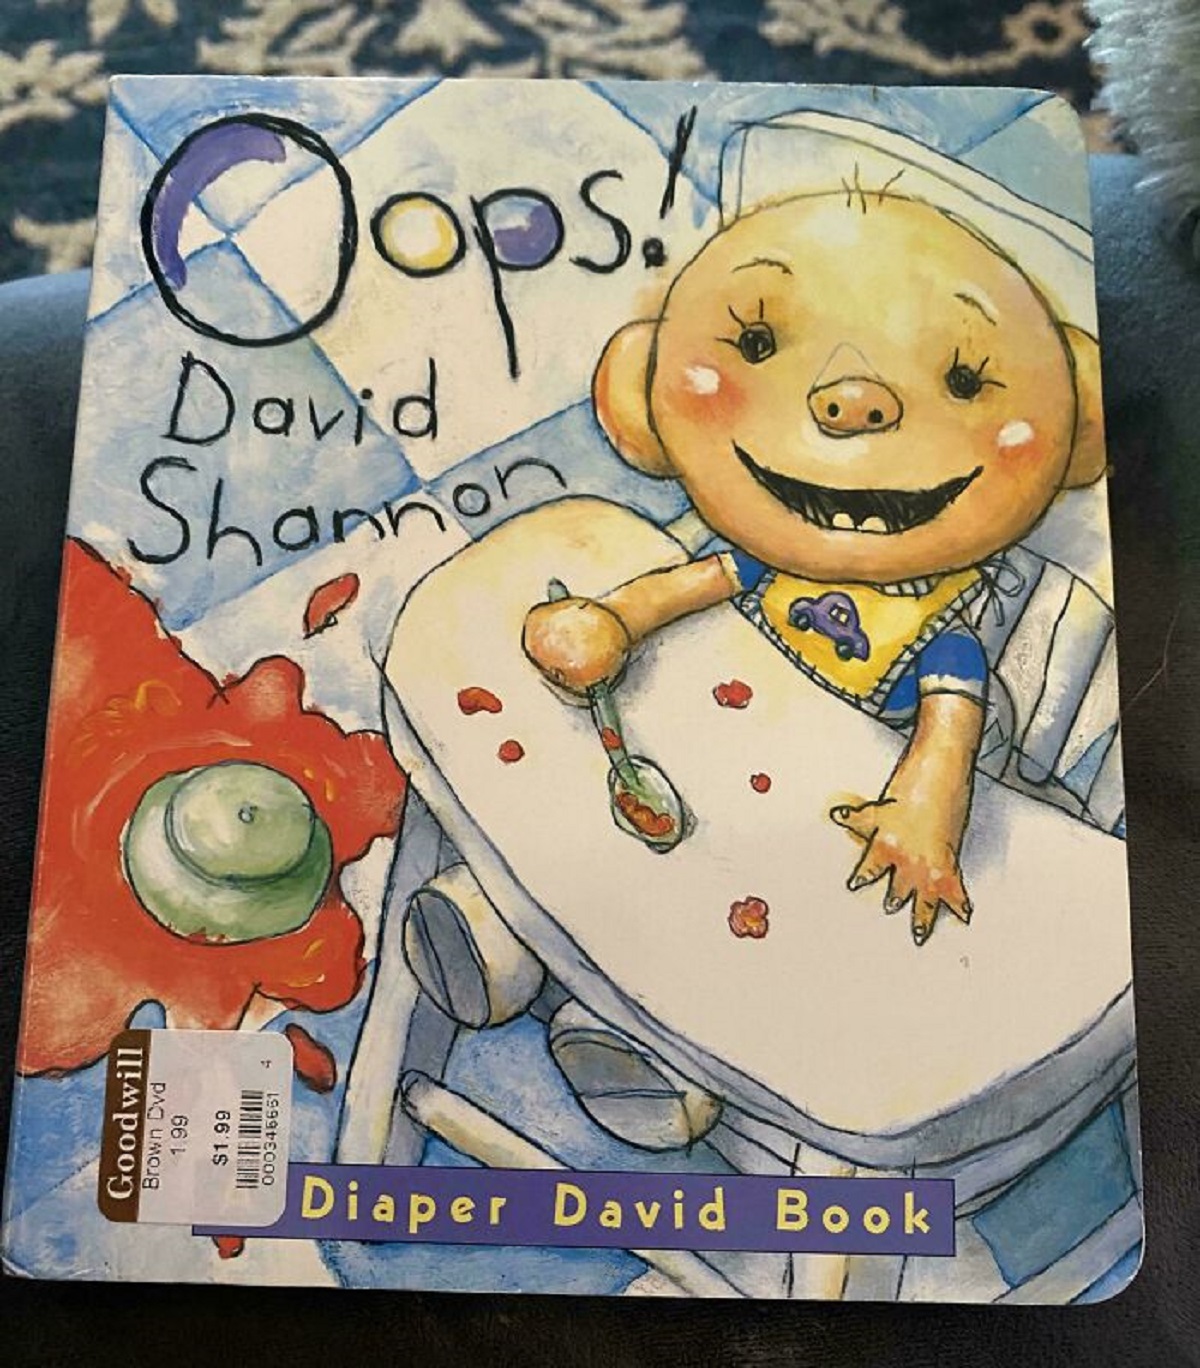 oops david book - Goodwill Brown Dvd A $1.99 Oops David Shannon Diaper David Book